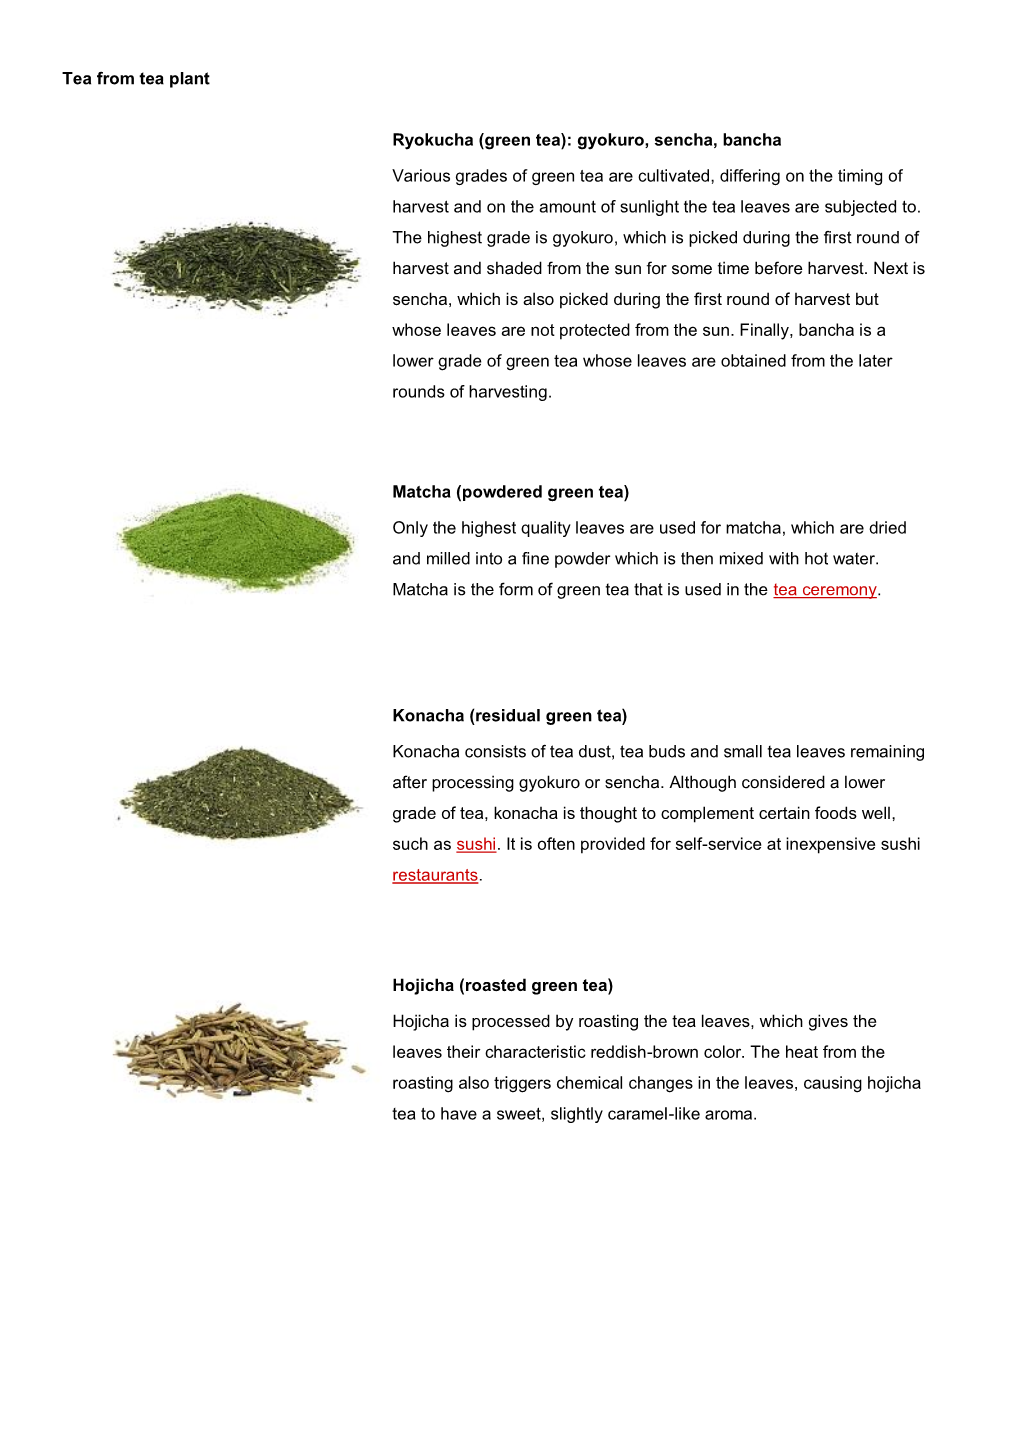 Tea from Tea Plant Ryokucha (Green Tea): Gyokuro, Sencha, Bancha